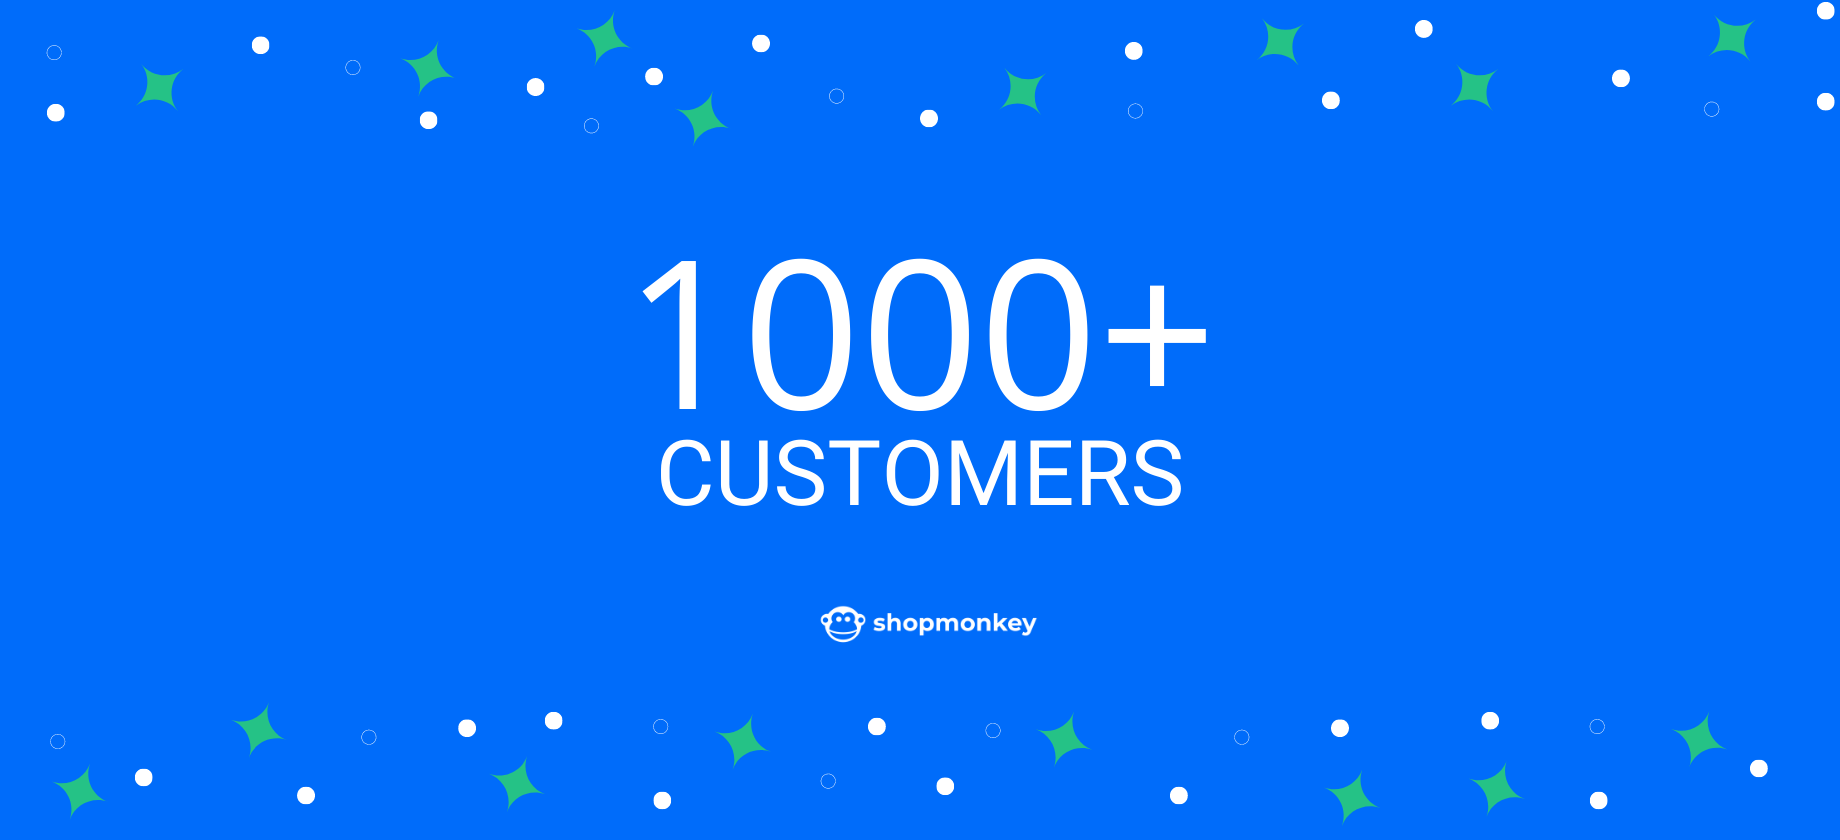 Celebrating over 1,000 Shopmonkey Customers